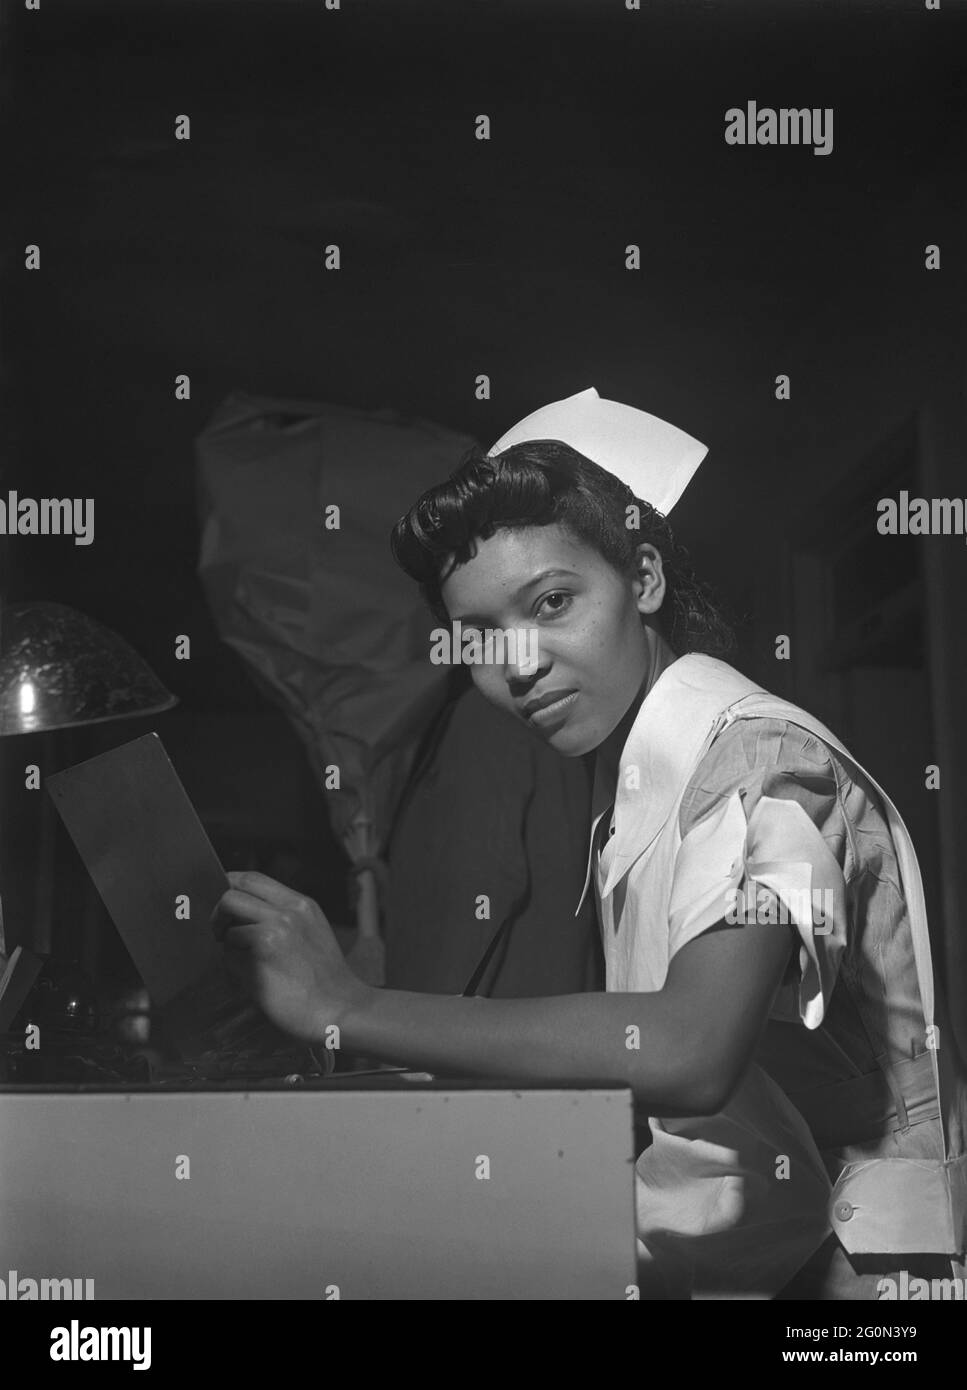 Miss Lydia Monroe, studentische Krankenschwester aus Ringold, Louisiana, Provident Hospital, Chicago, Illinois, USA, Jack Delano, U.S. Office of war Information, März 1942 Stockfoto